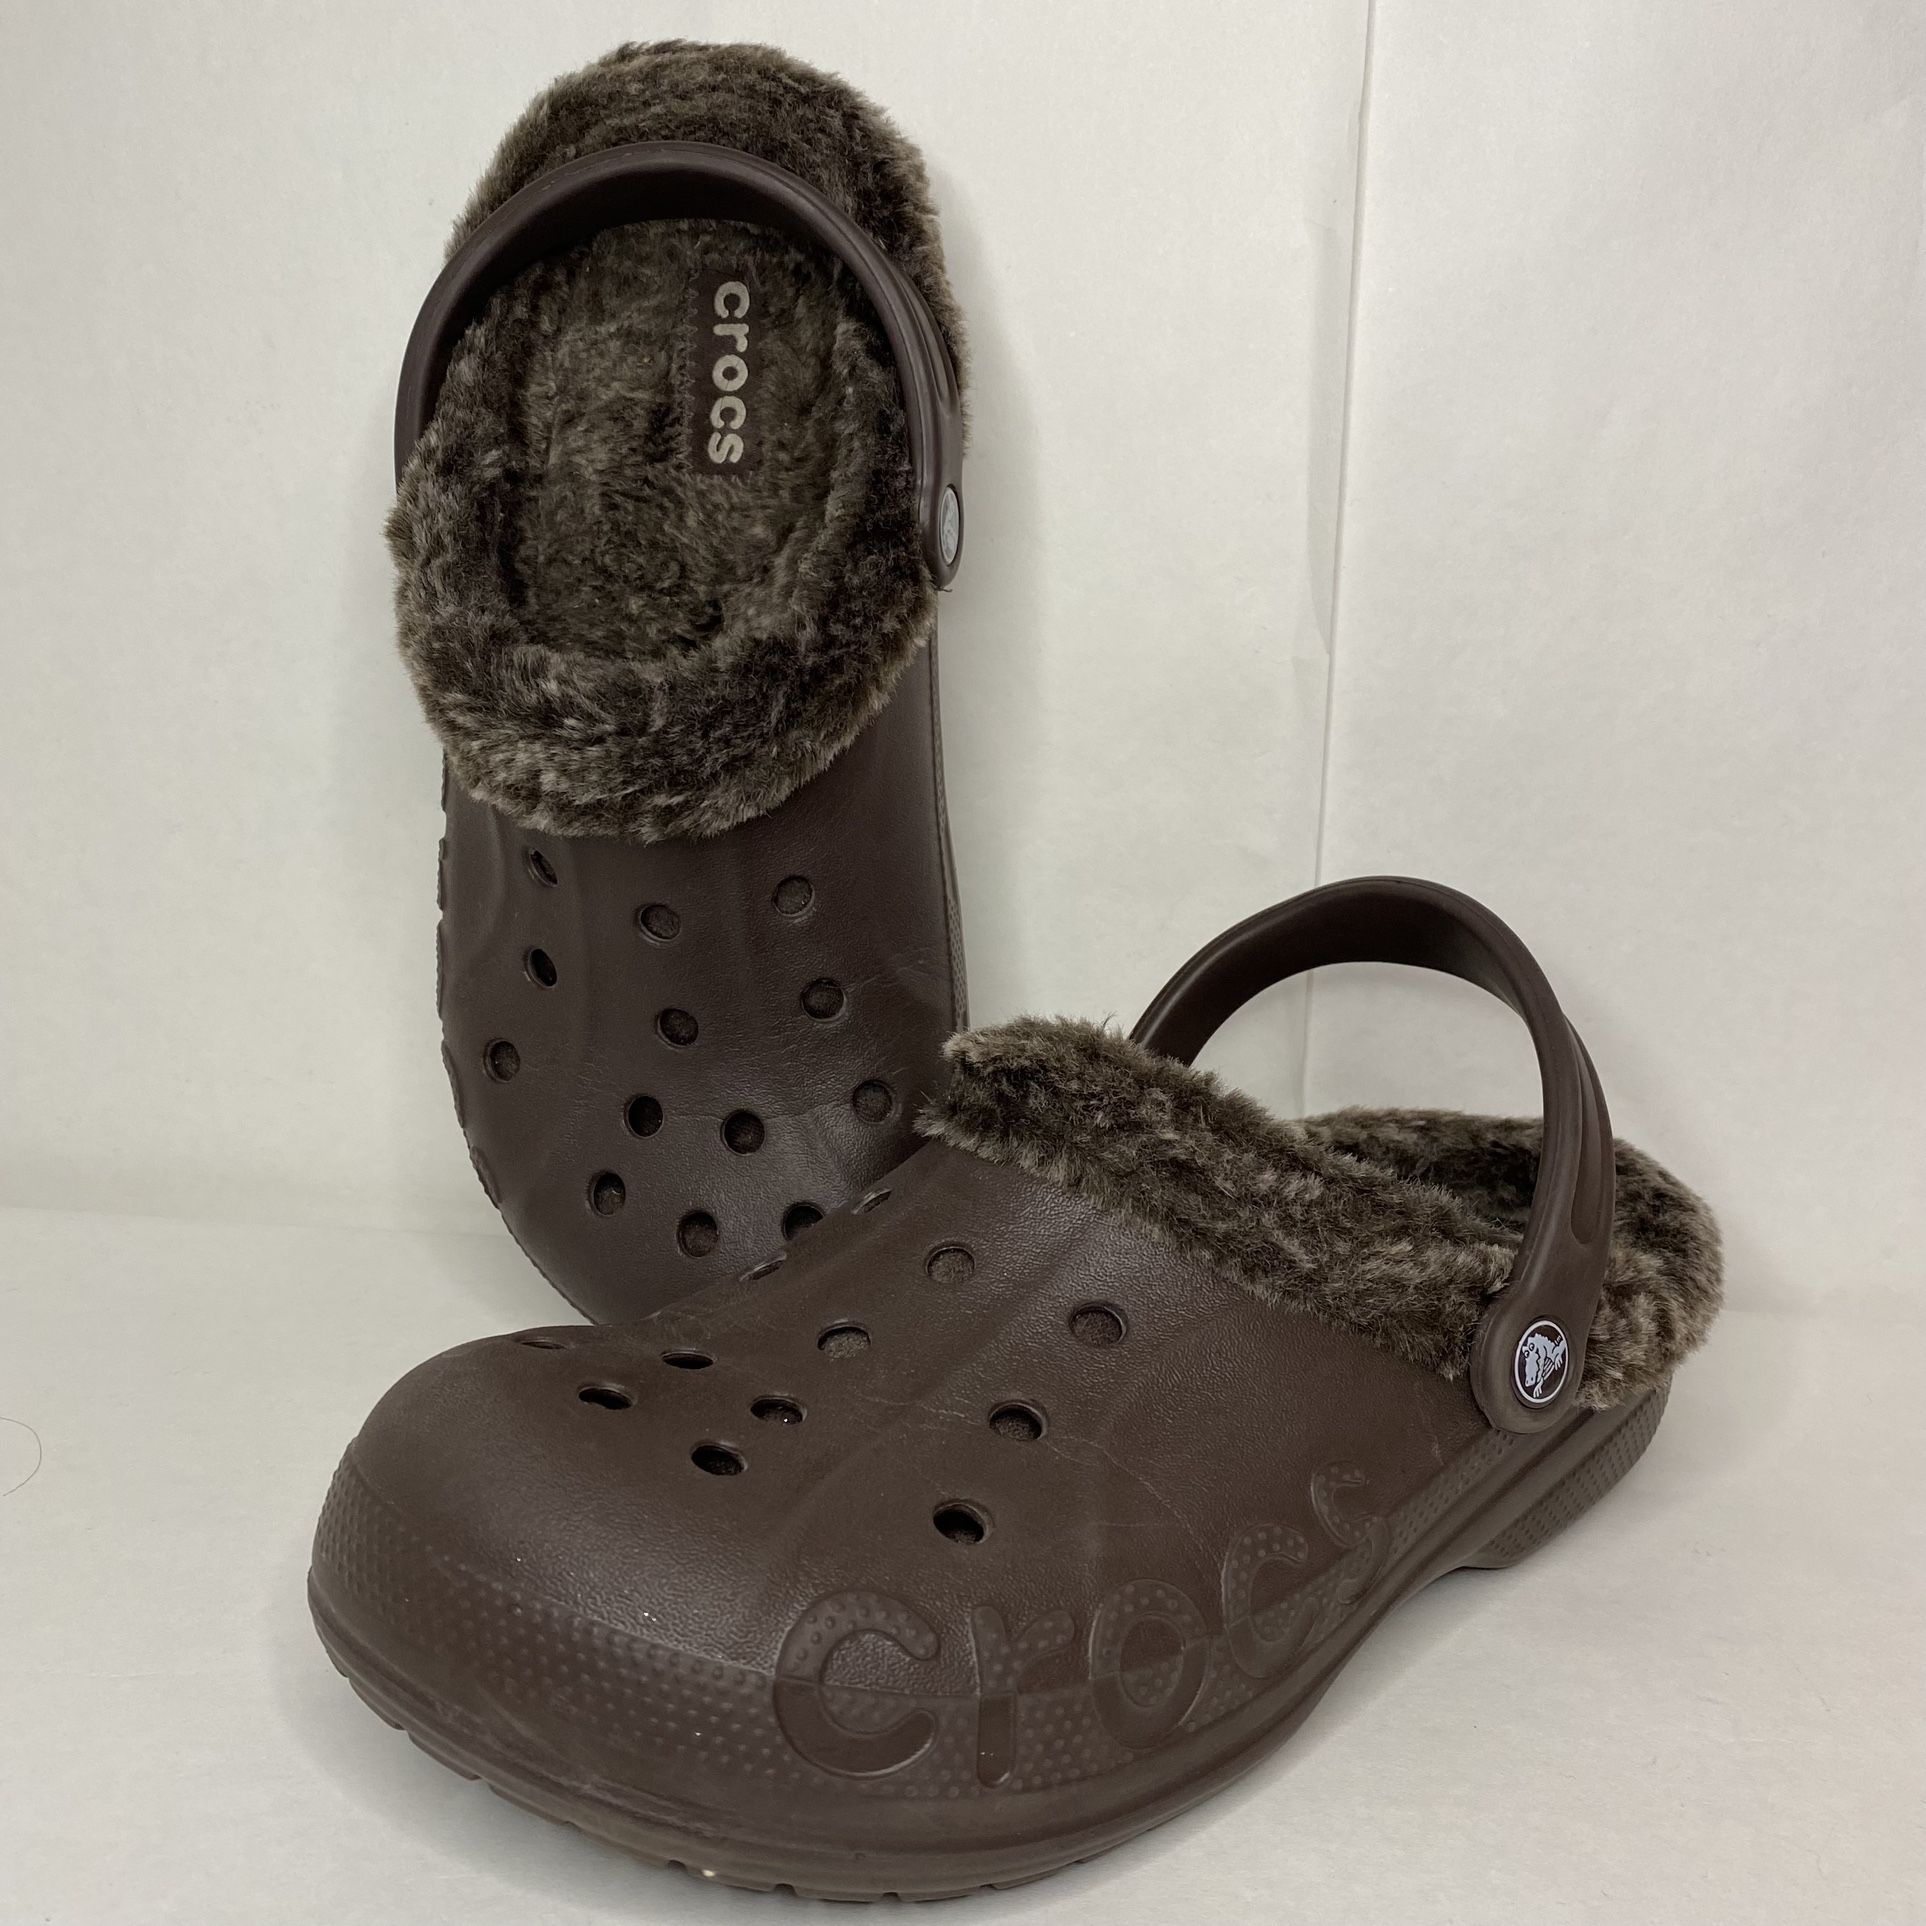 Crocs Faux Fur Slip On W Strap Comf Clog Shoes Men Size 7 /Women’s Size 9 Brown